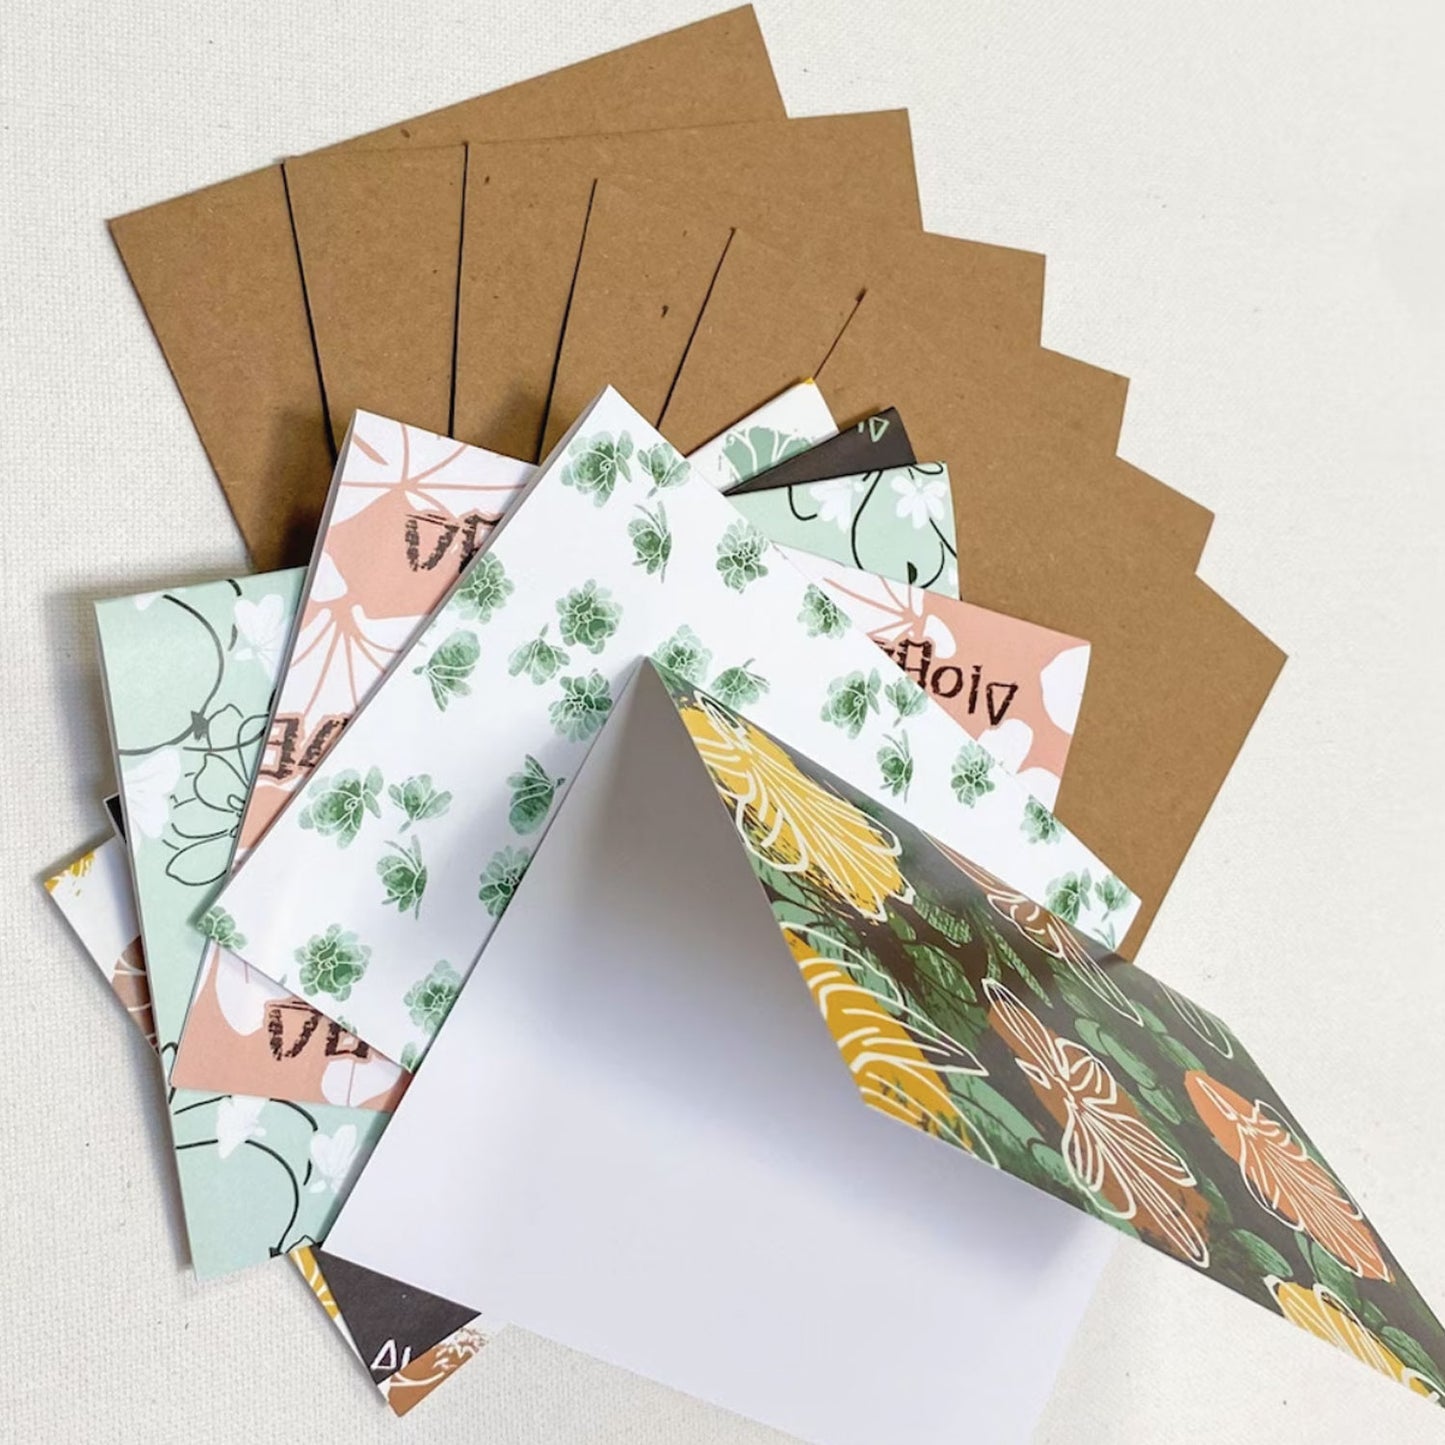 Hawaiian Greeting Cards 4"x6" 6 Pack - Naupaka Aloha Variety